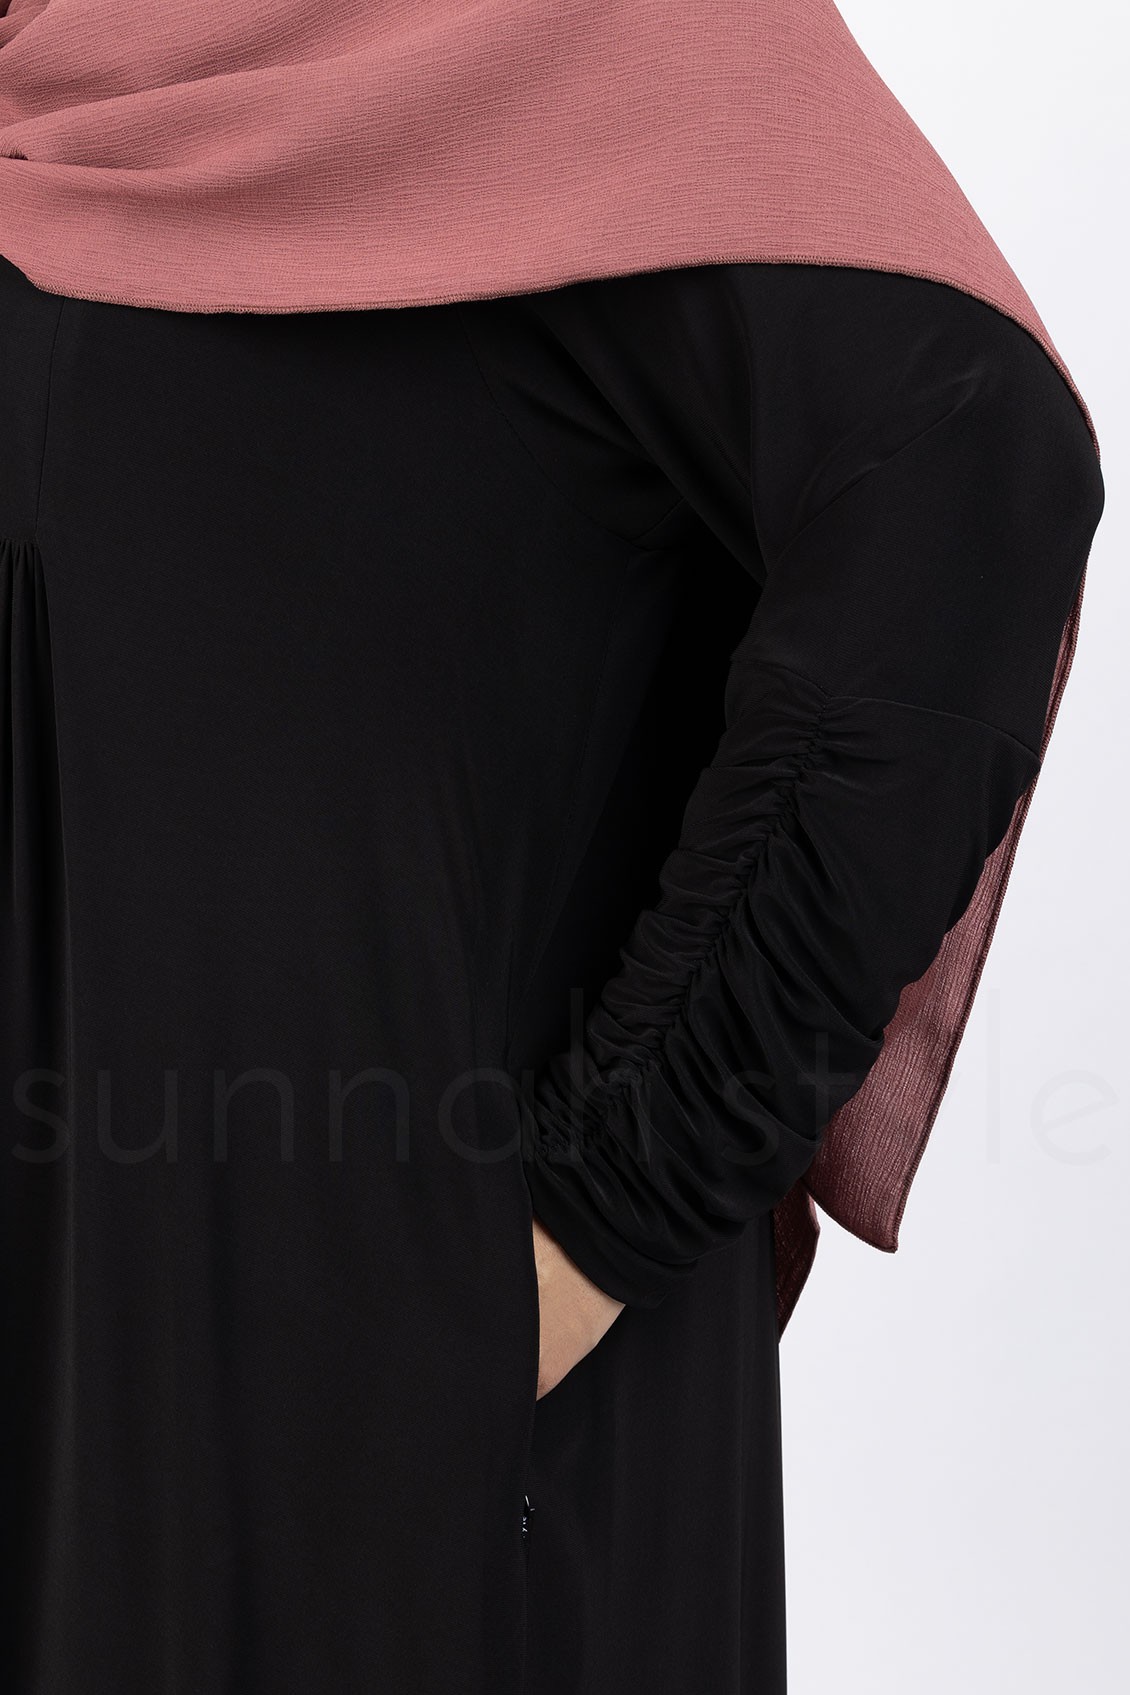 Sunnah Style Flourish Jersey Abaya Black